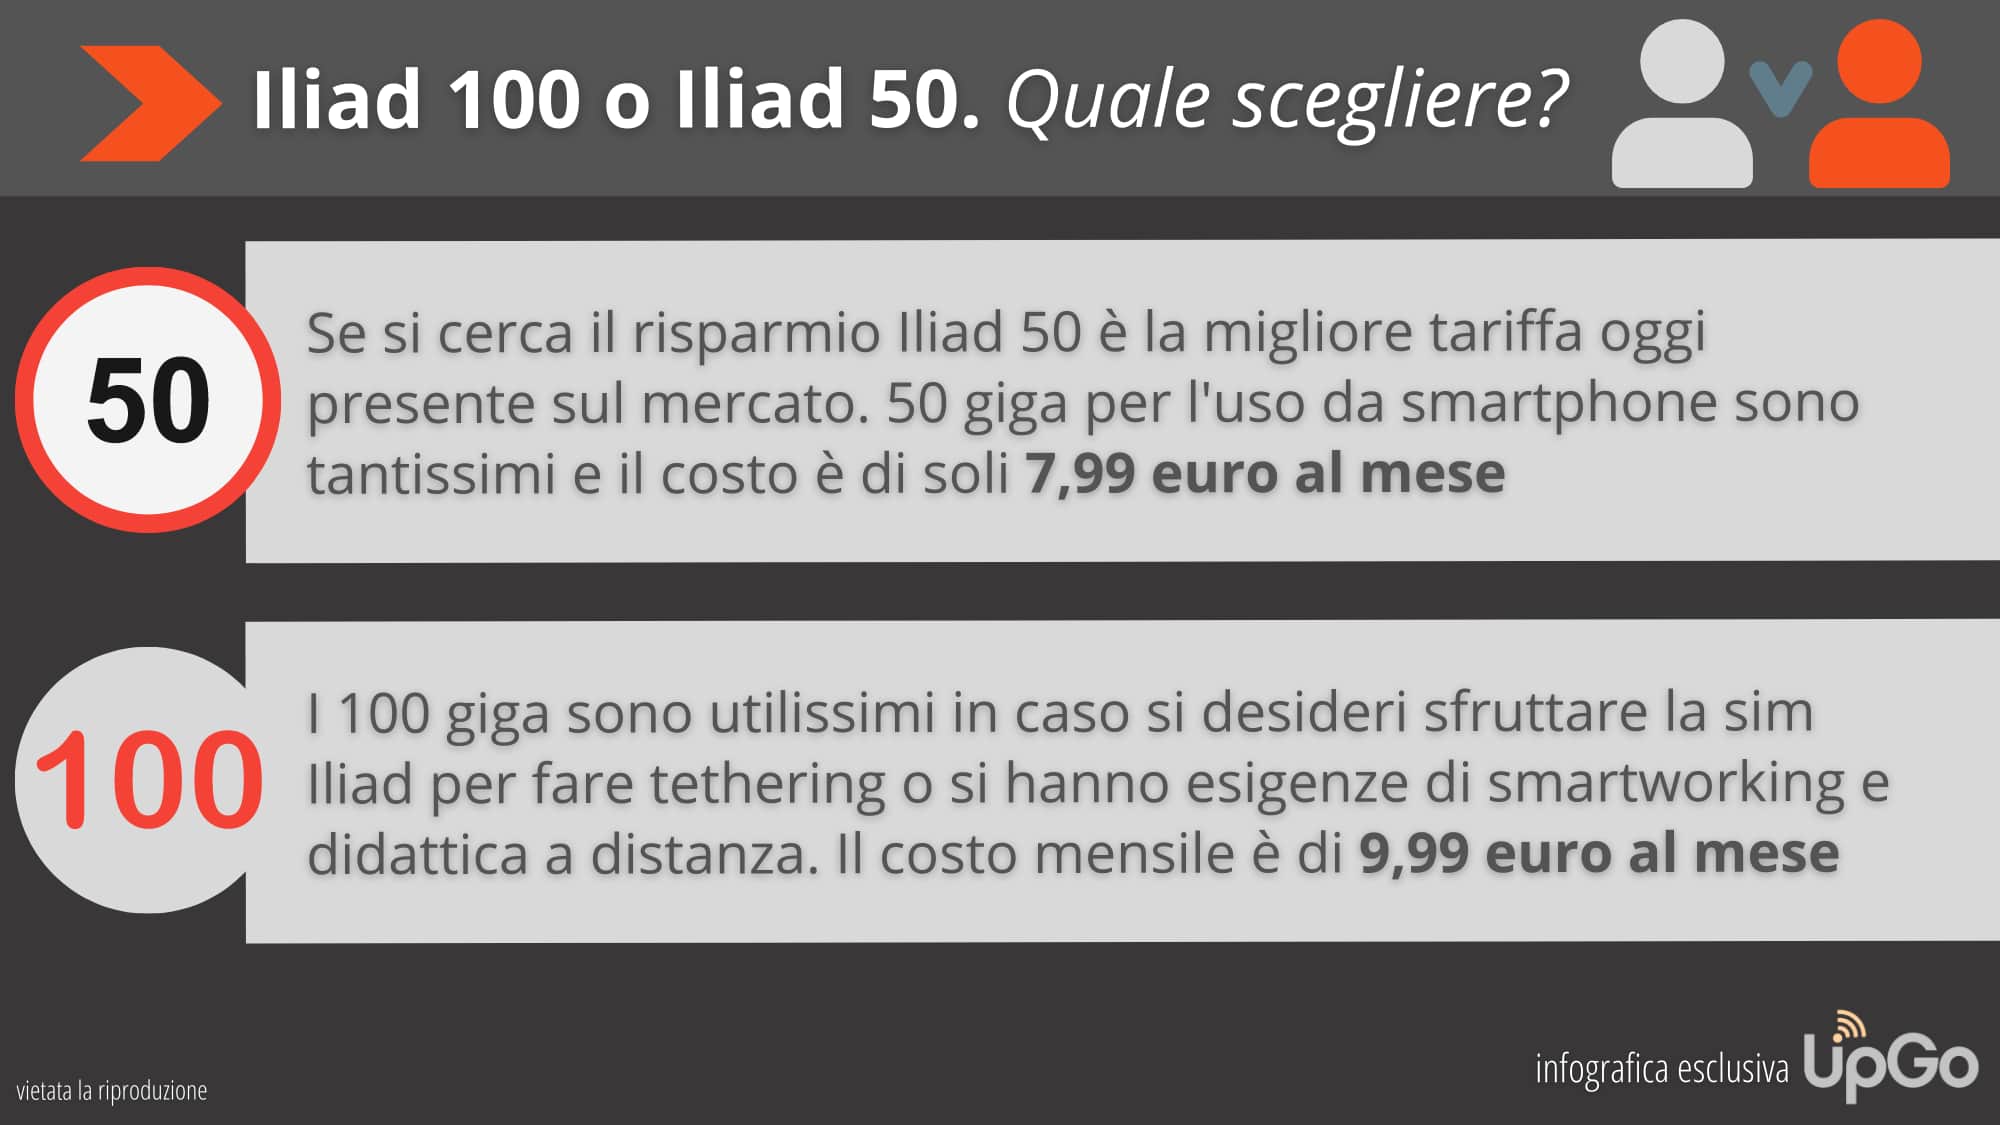 Iliad 100 vs Iliad 50